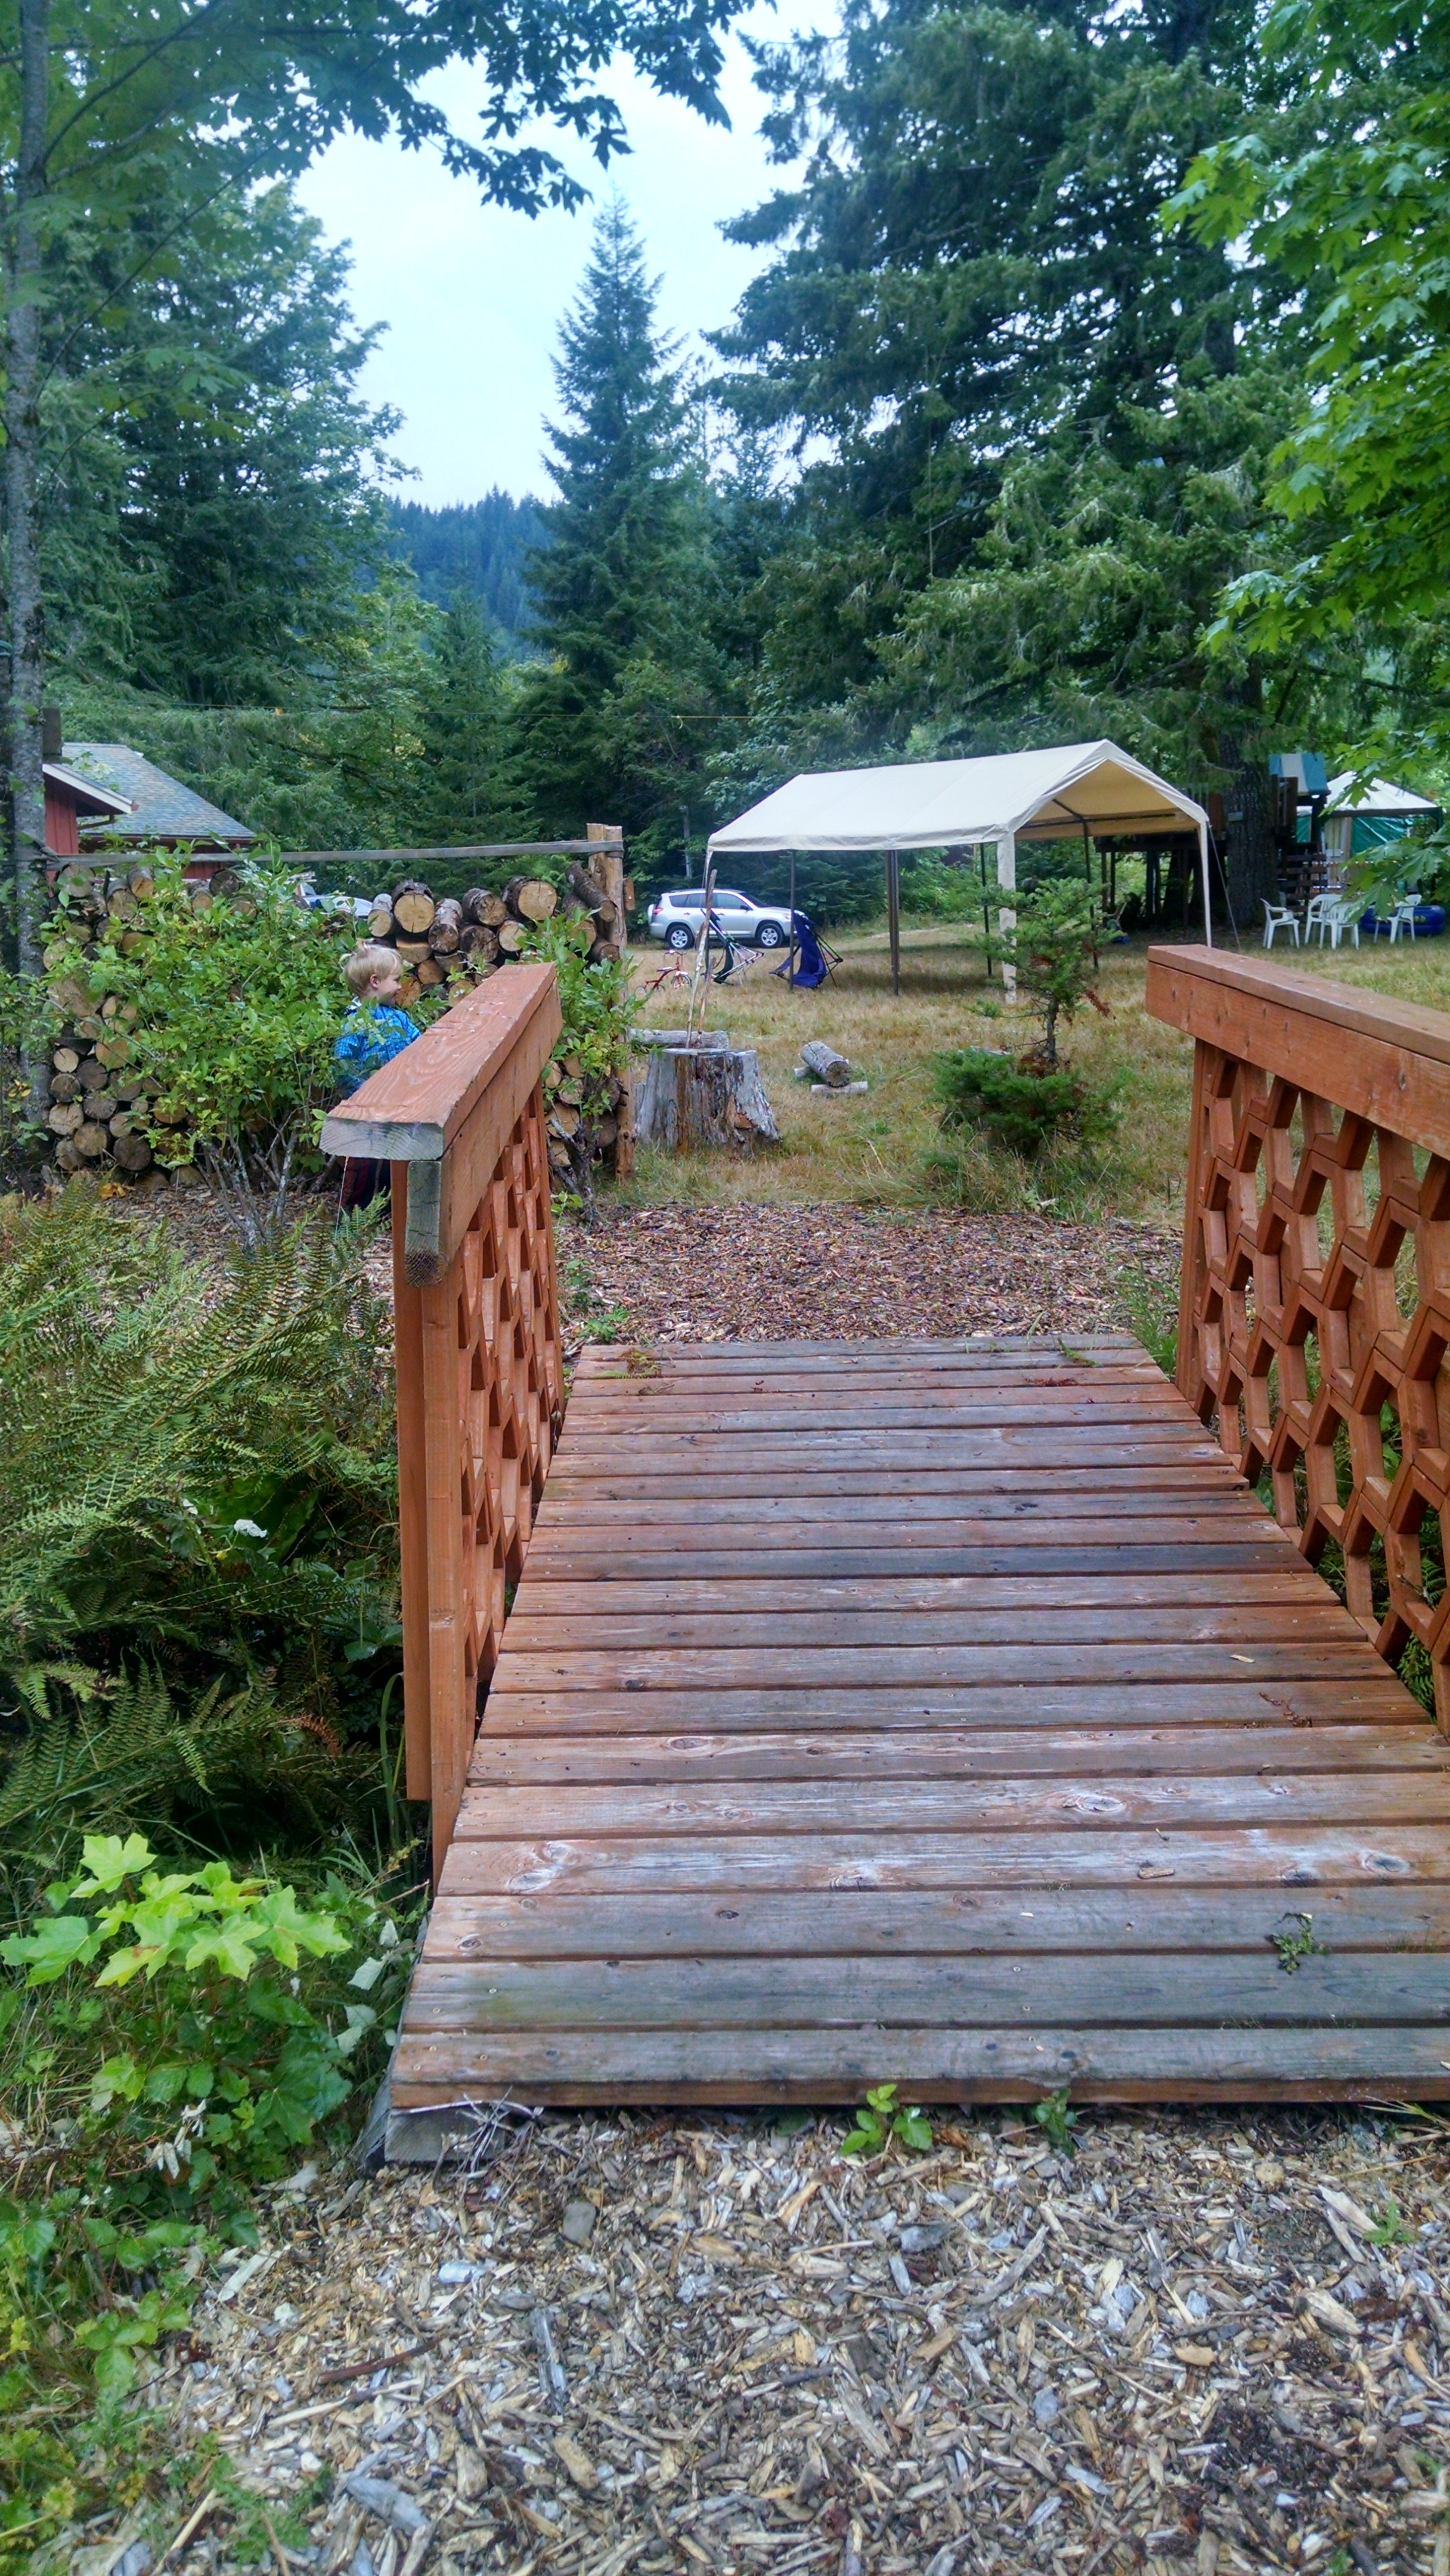 Gallery zigzag-mountain-farm-campsite